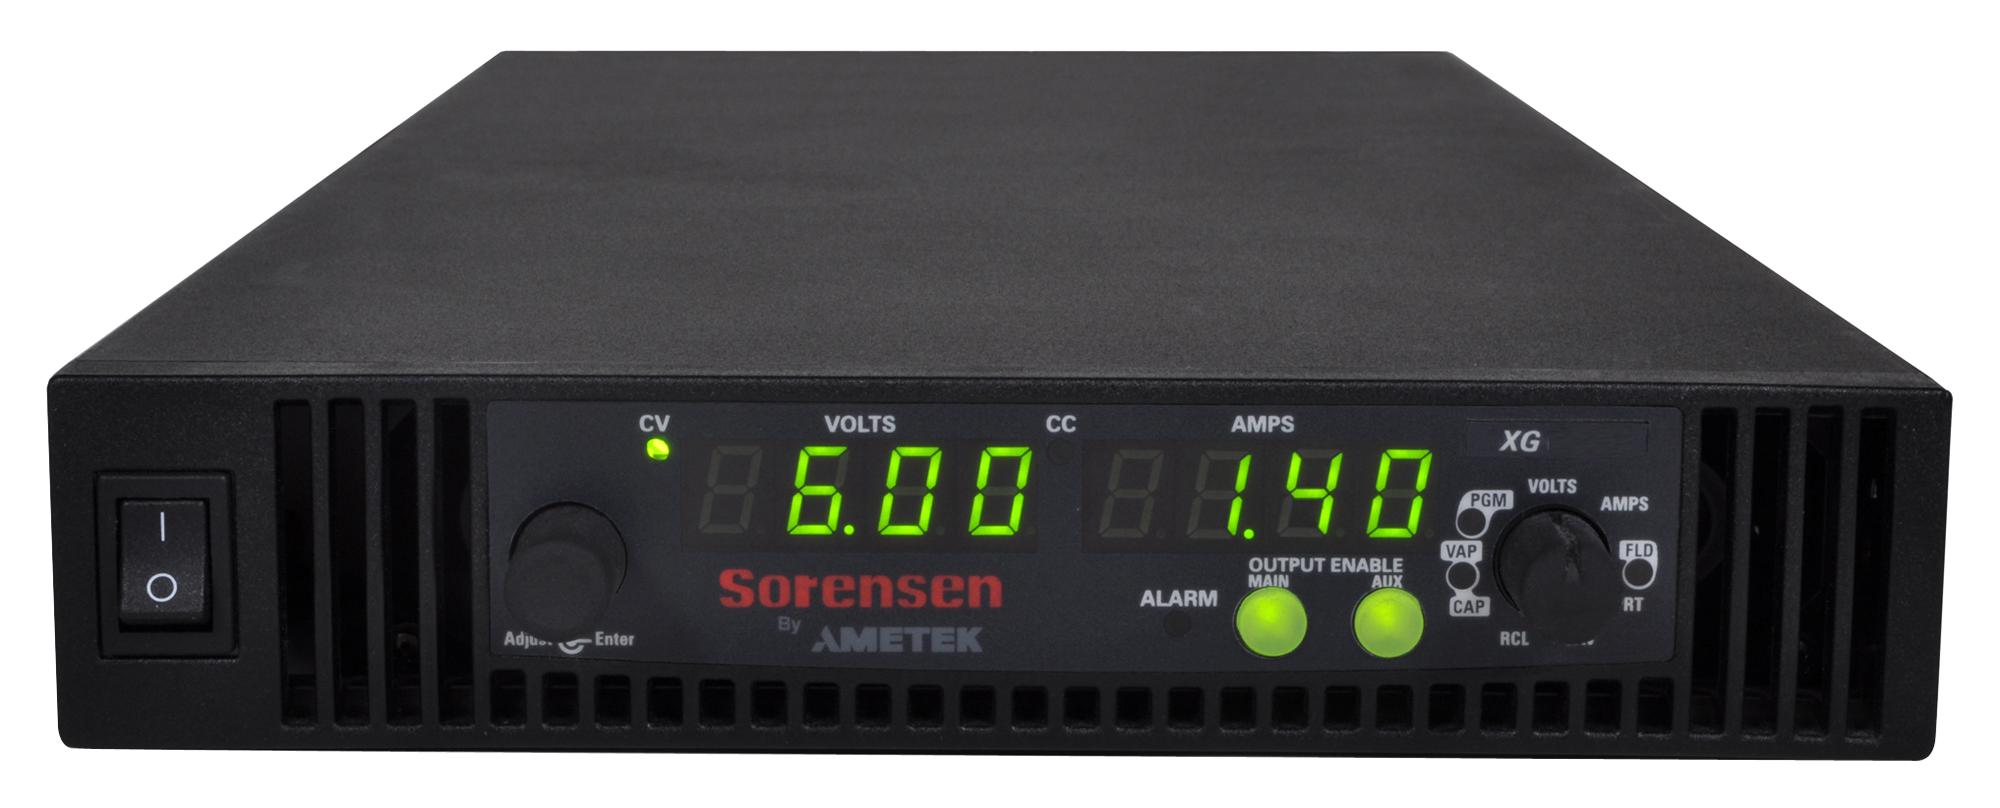 Ametek Programmable Power Xg 150-5.6R Power Supply, Prog, 5.6A, 150V, 850W